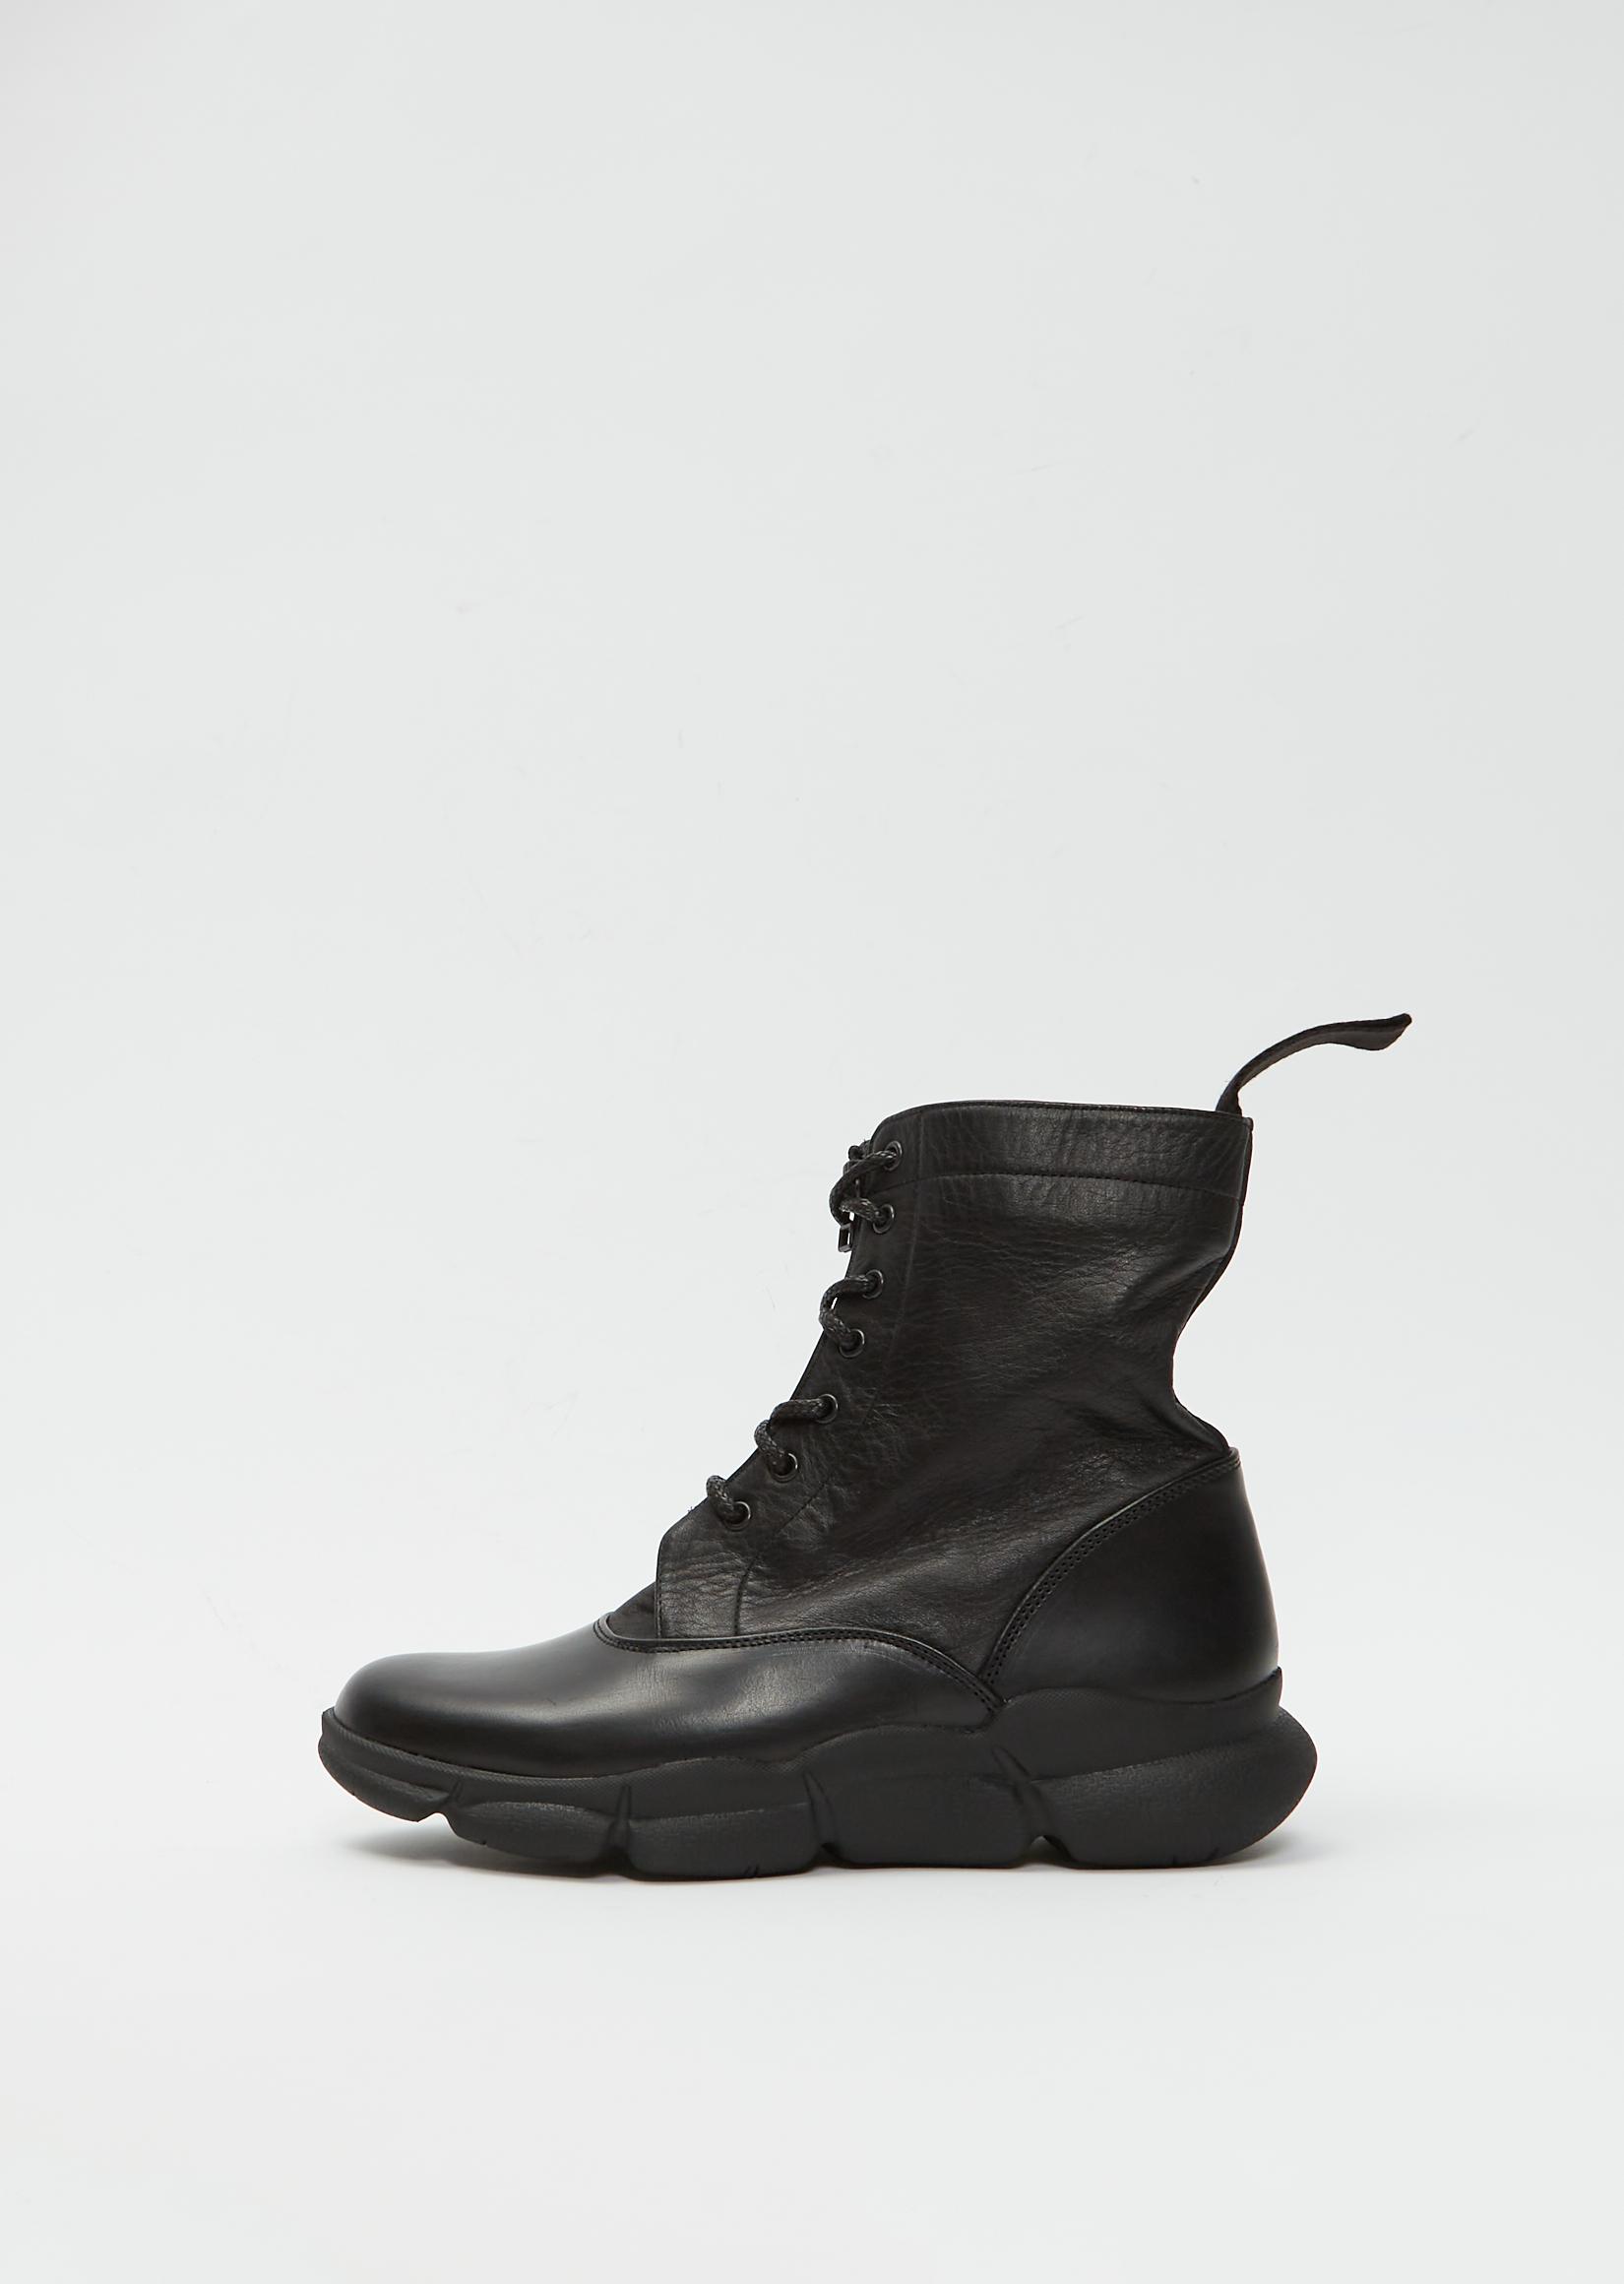 Y's Yohji Yamamoto Front Zipper Boots in Black | Lyst